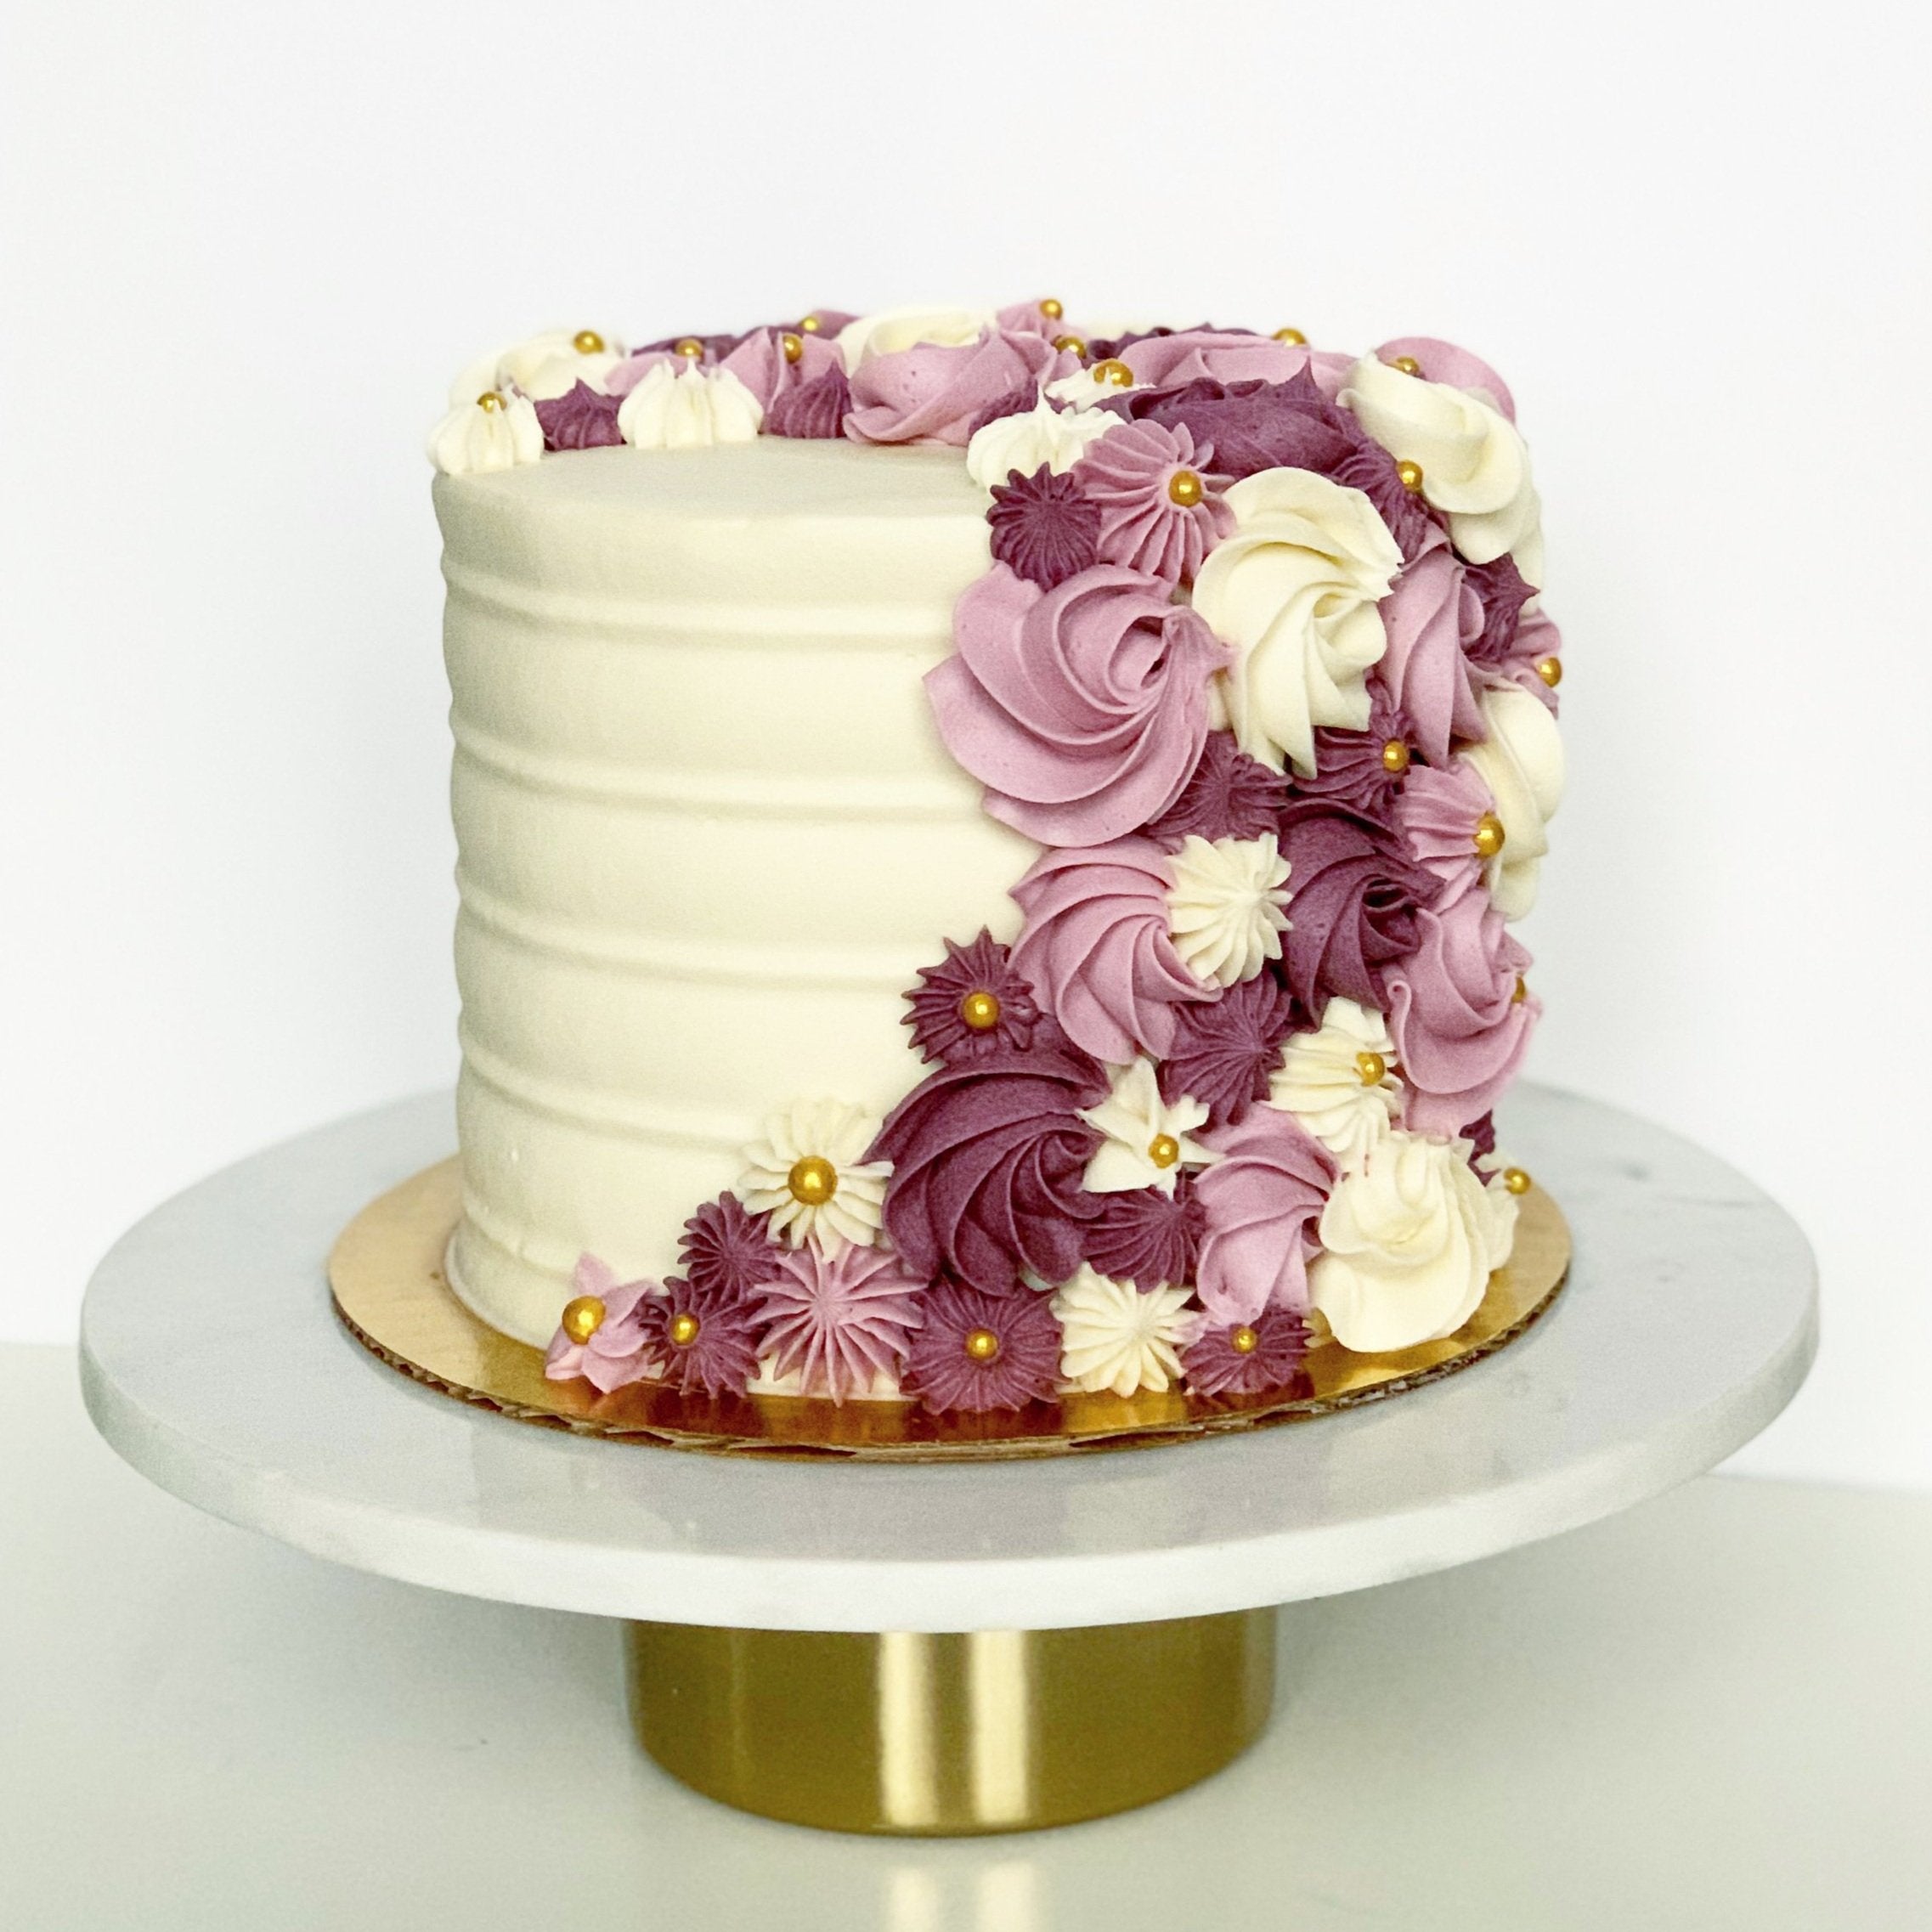 Floral Euro Style Cake - My Bake Studio